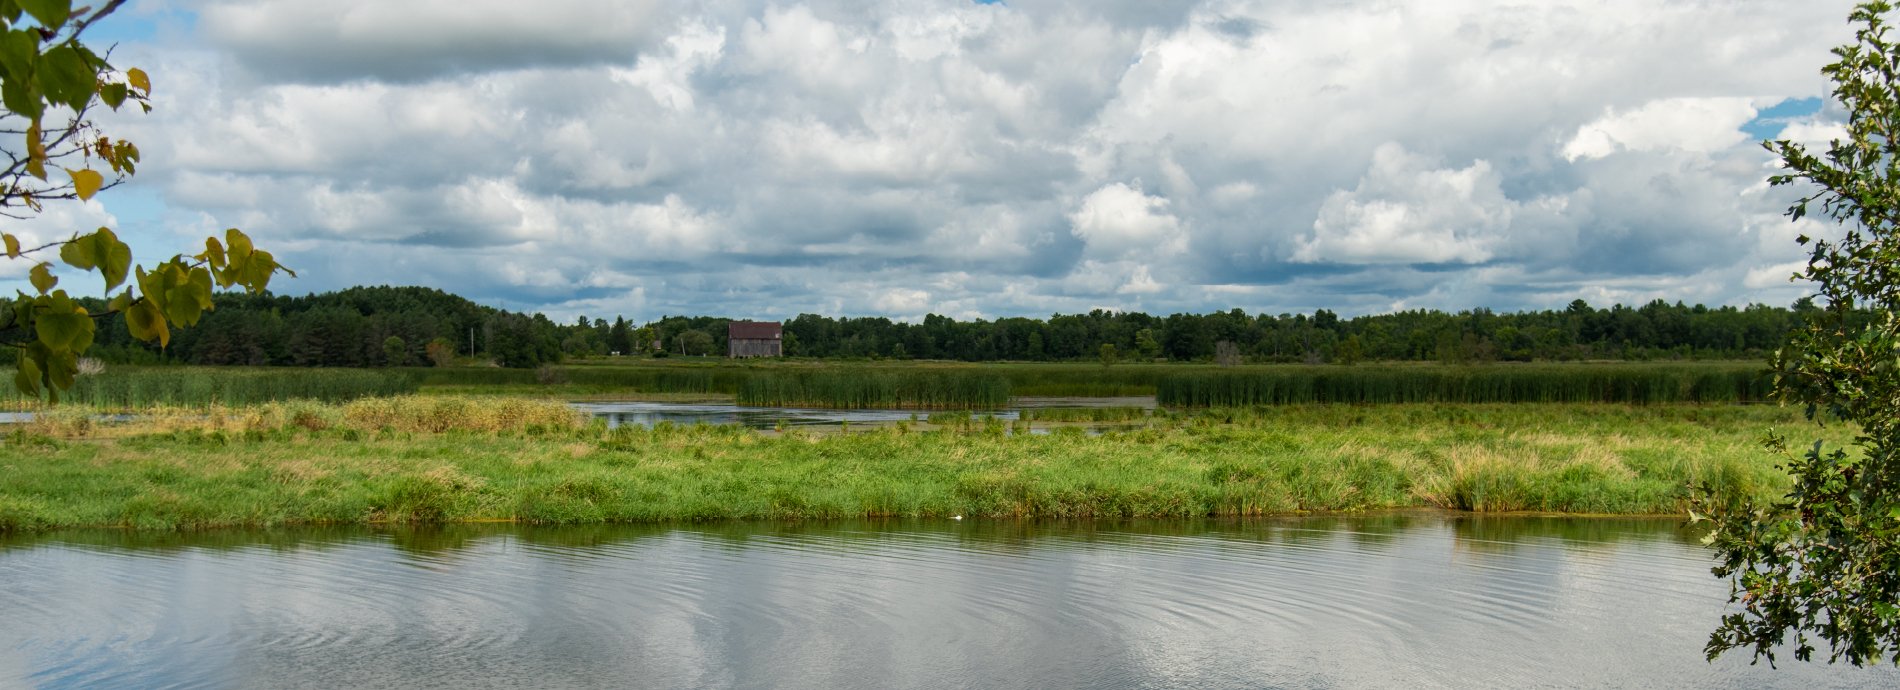 landscape view of a wetland